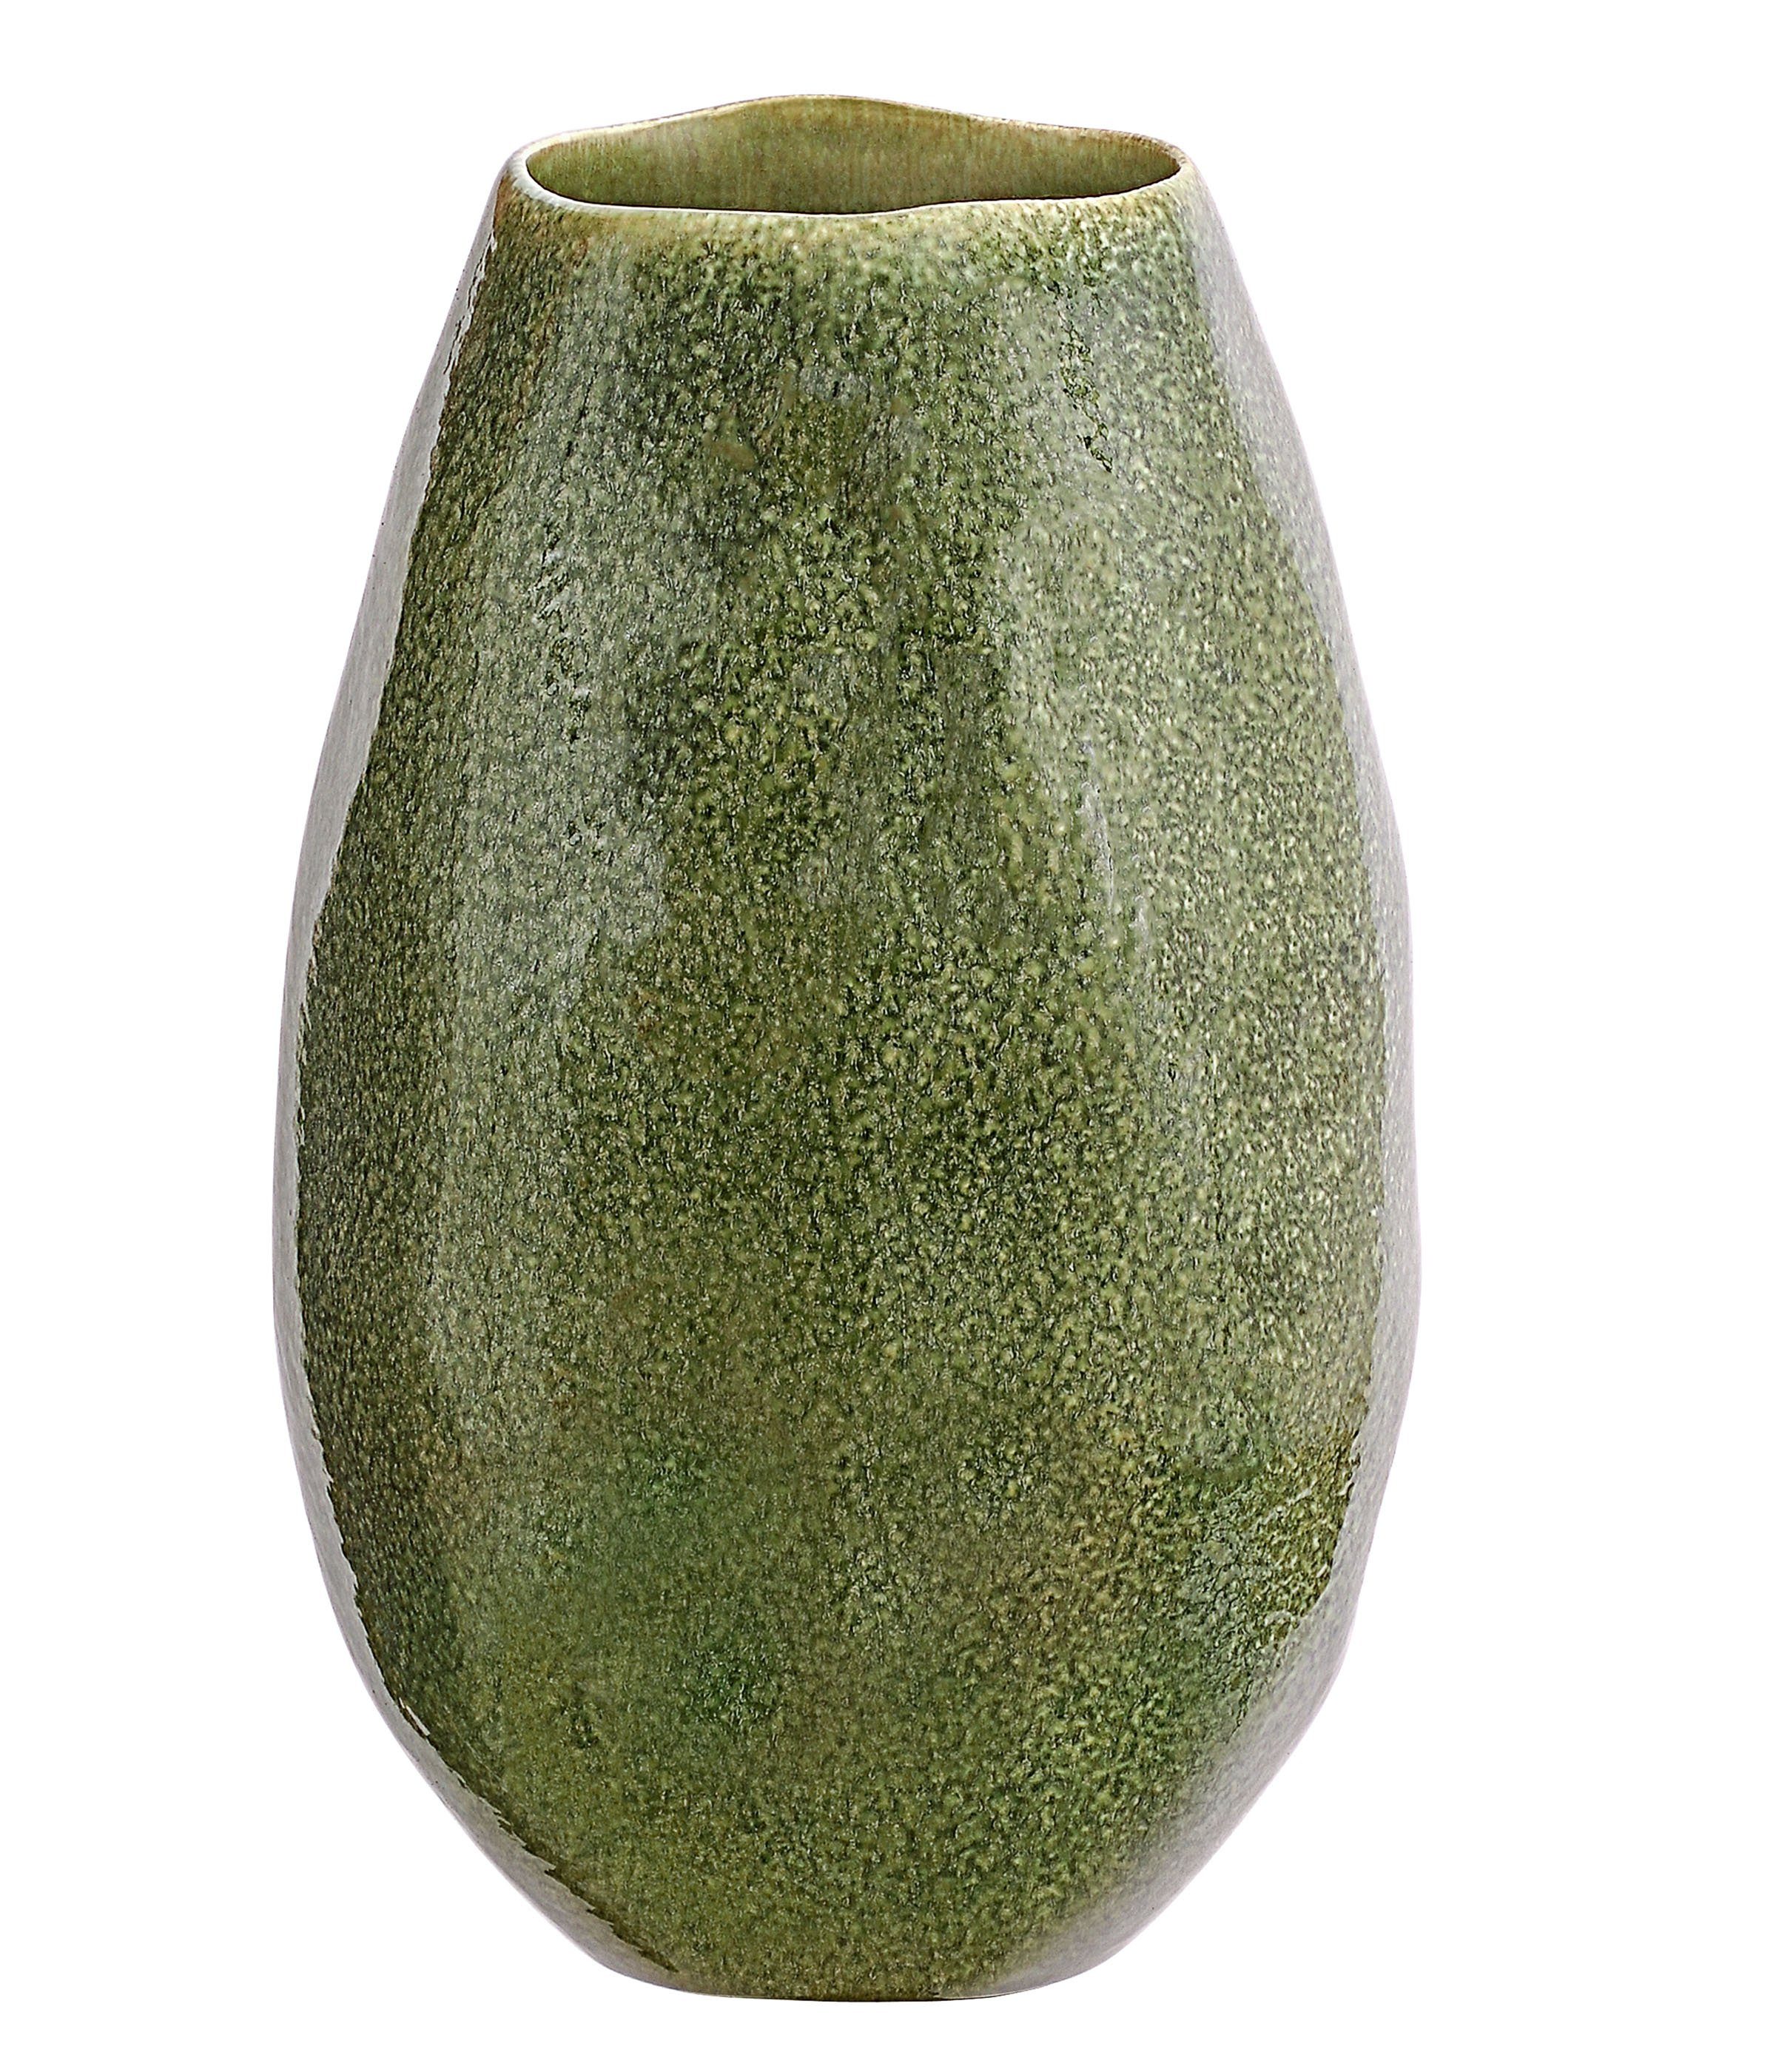 Blumenvase Übertopf oder Keramik, dunkelgrün, lasiert, als handgefertige Vase Dehner Linn, Übertopf